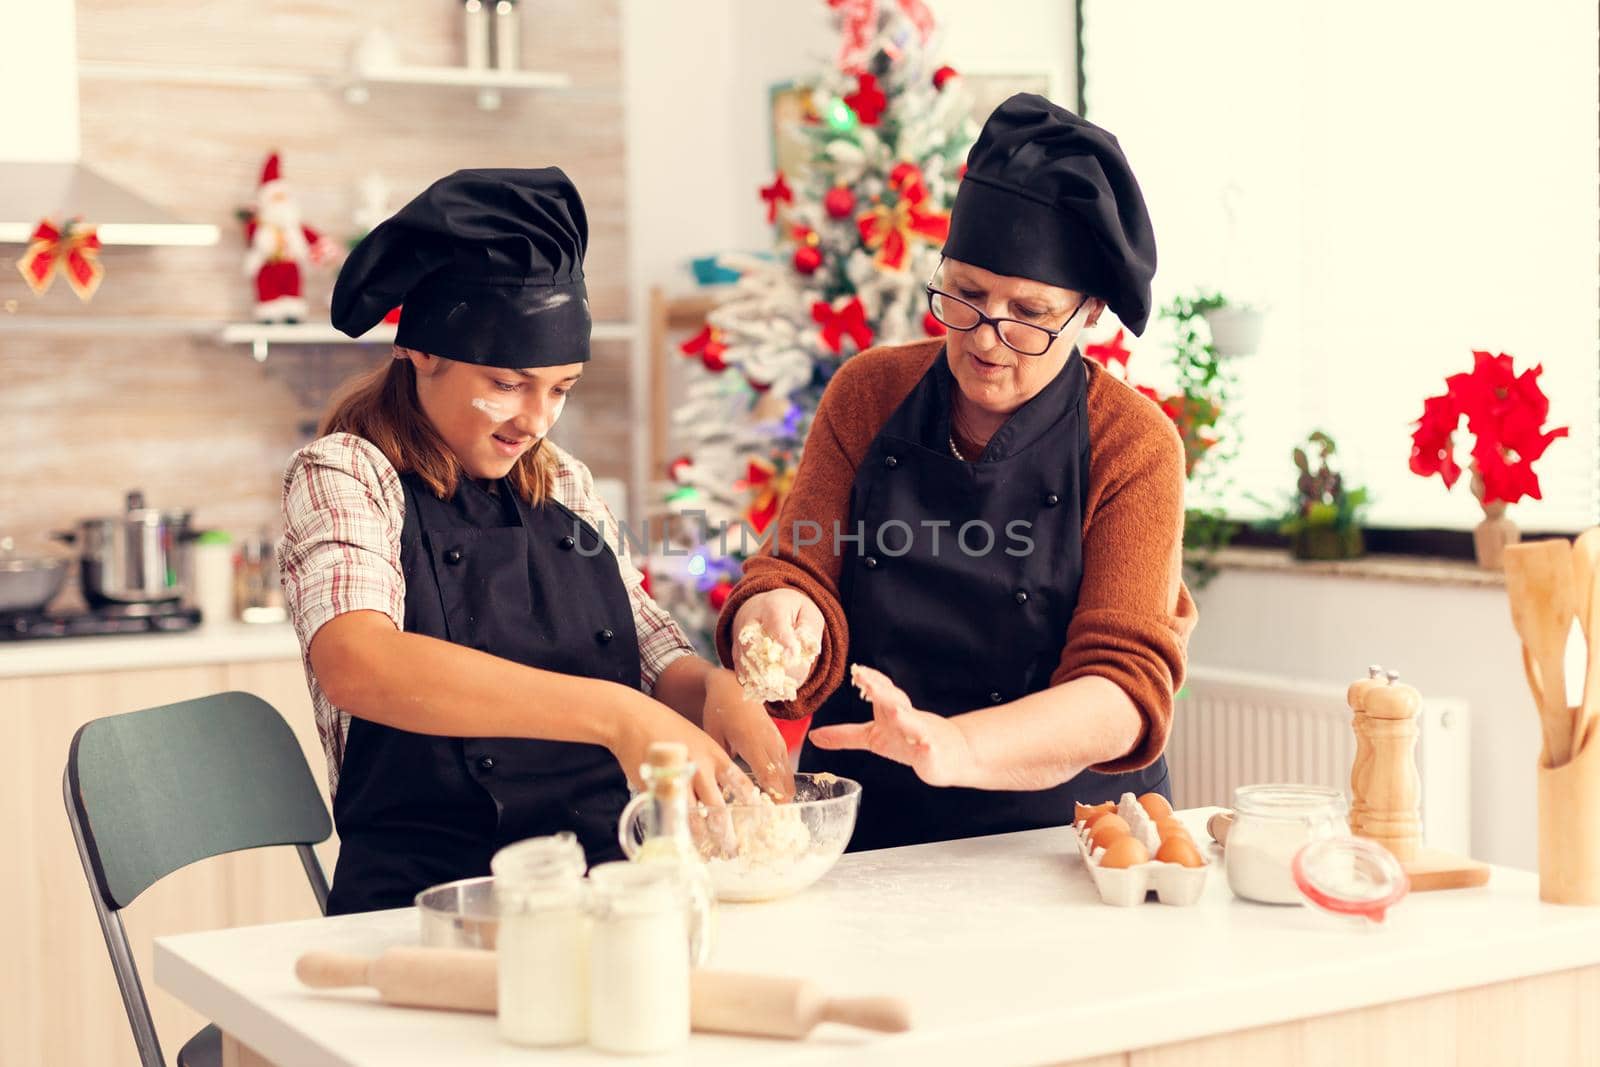 Kid wearing apron mixing dough on christmas day with grandmother. Happy cheerful joyfull teenage girl wearing apron and bonette helping senior woman preparing sweet cookies to celebrate winter holidays.